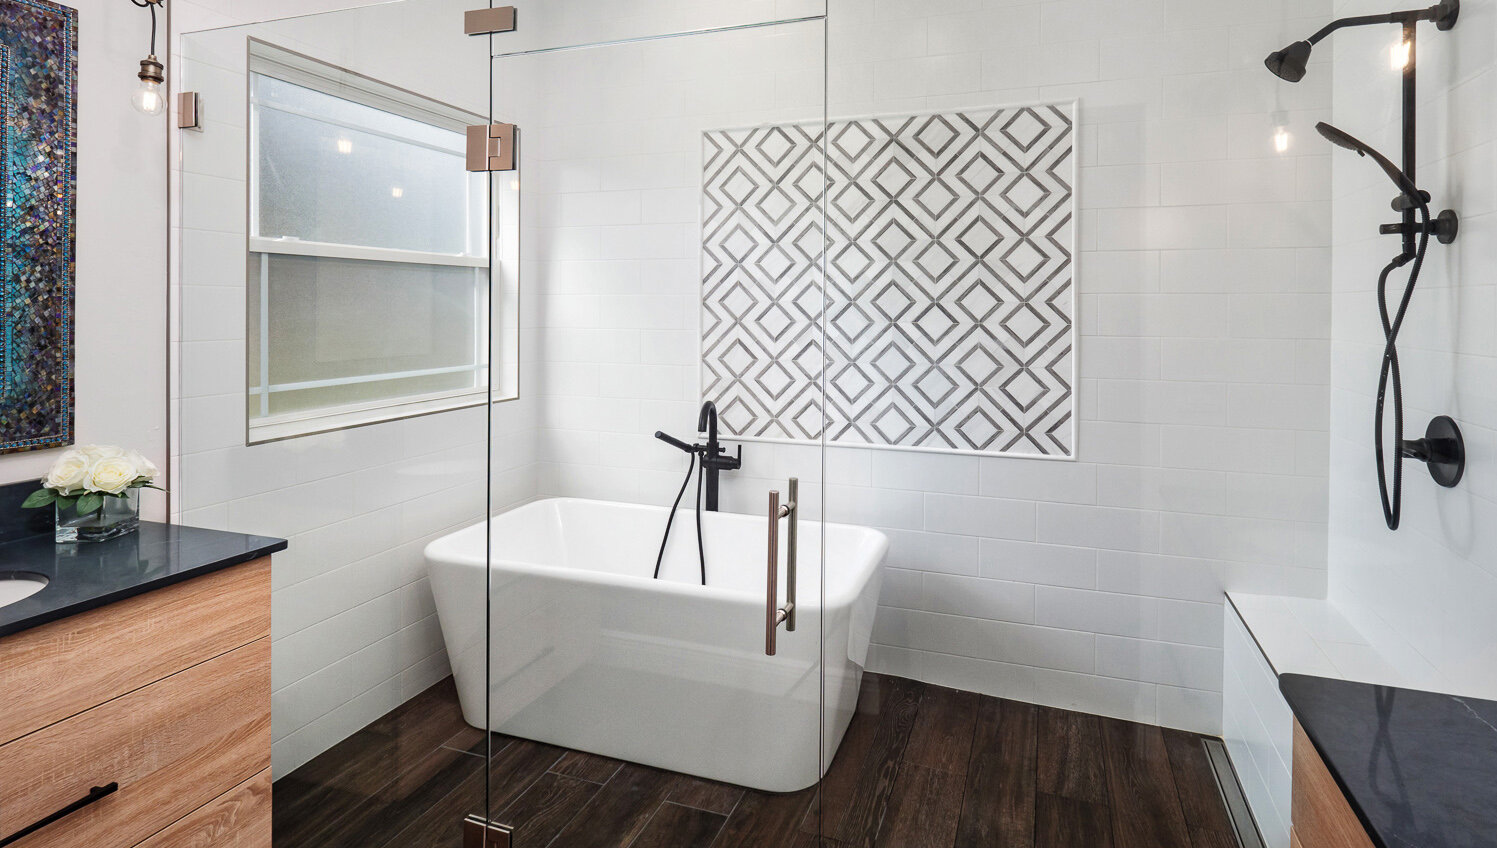 bath design with freestanding tub inside the shower enclosure